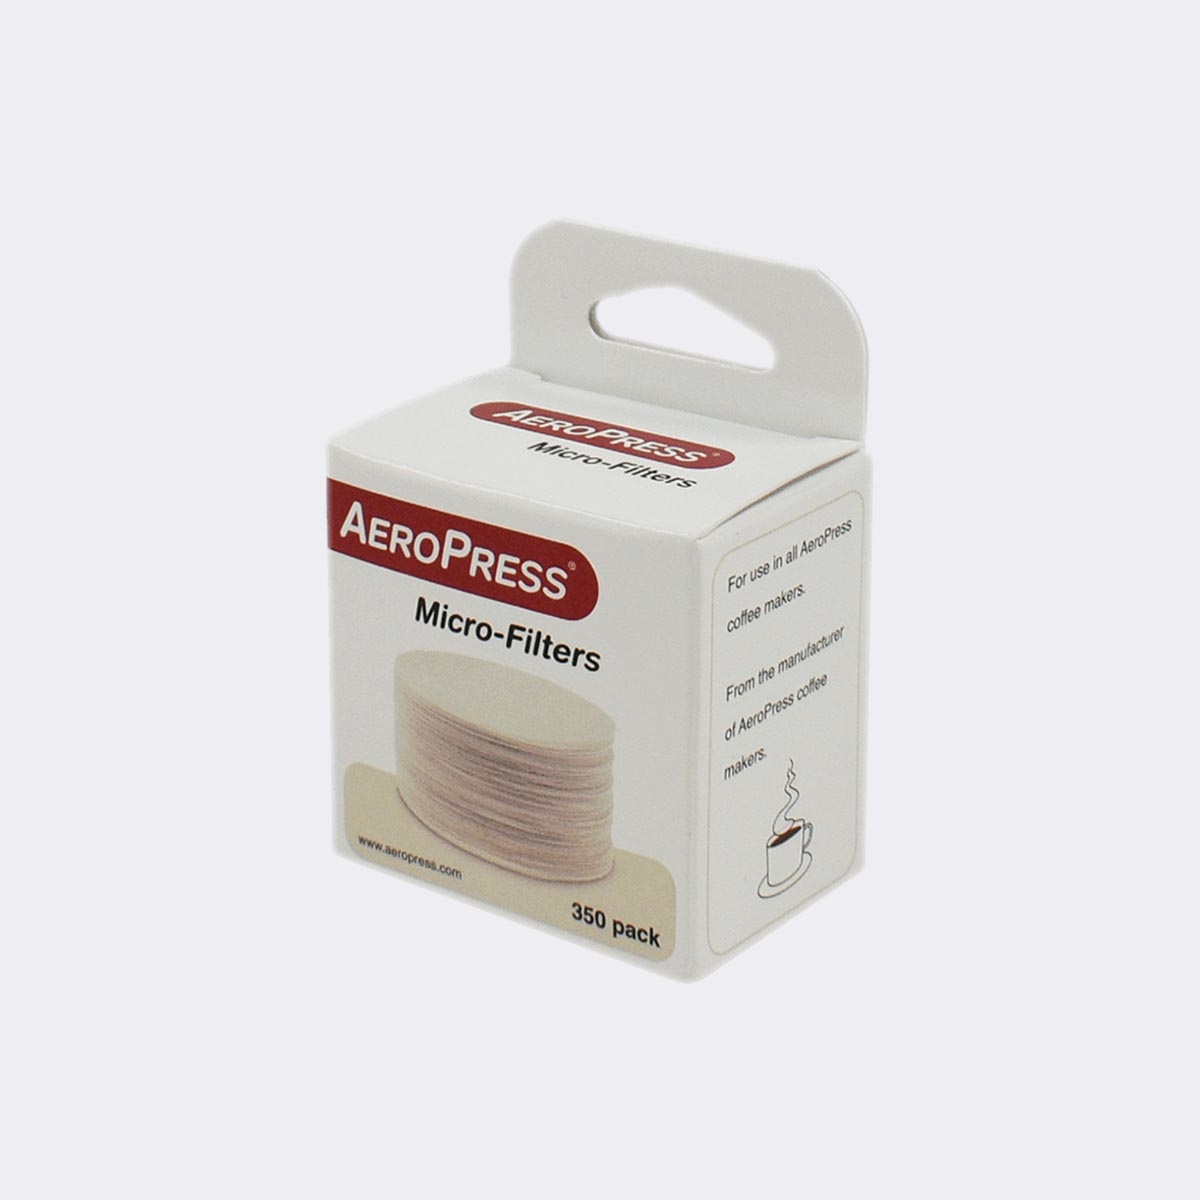 AeroPress Micro-Filters 350 pack voor alle ArroPress coffee makers